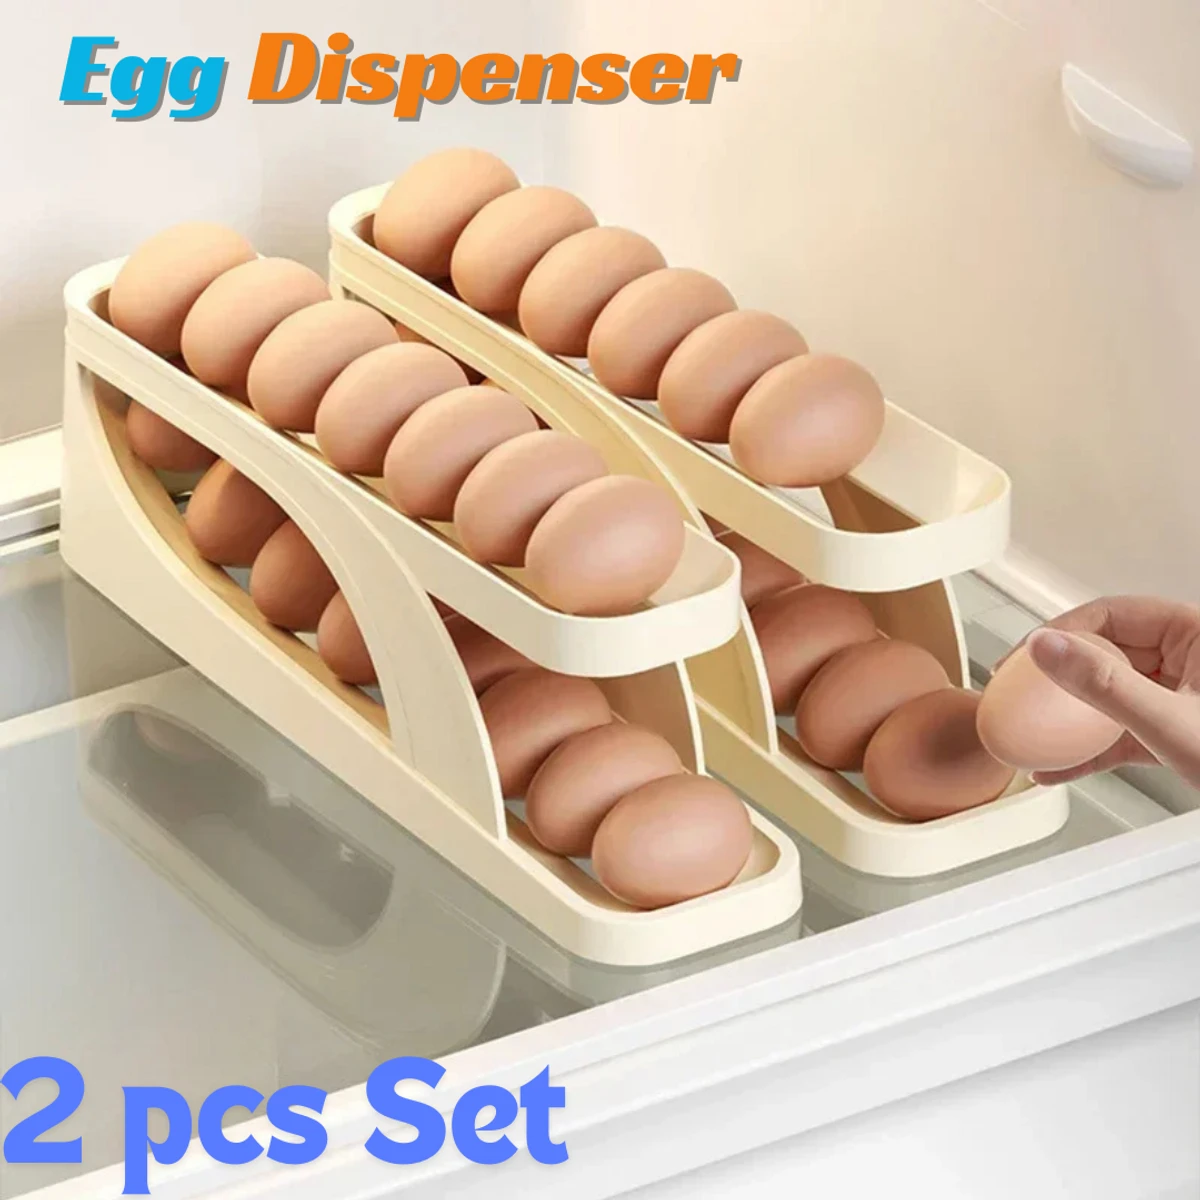 2 Pcs Automatic Scrolling Egg Rack Holder Storage Box Rolldown Refrigerator Egg Dispenser (2pcs)